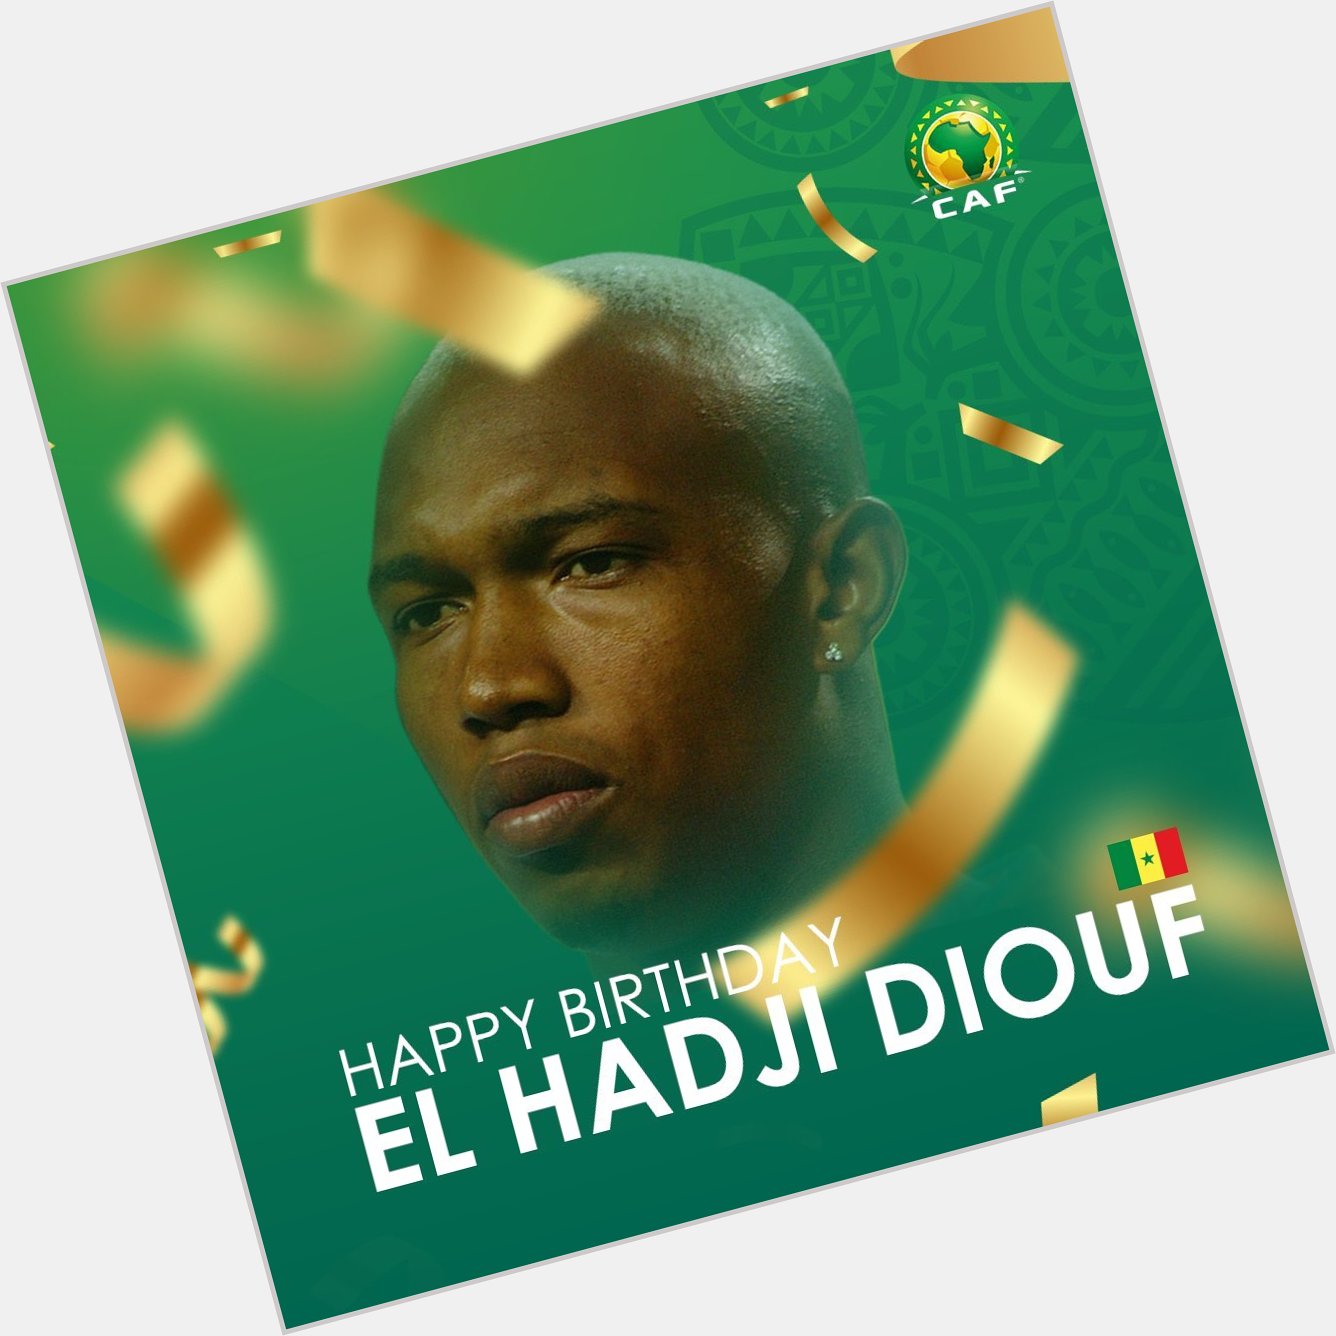 El Hadji Diouf turns 39 today! 
Happy birthday, legend. 